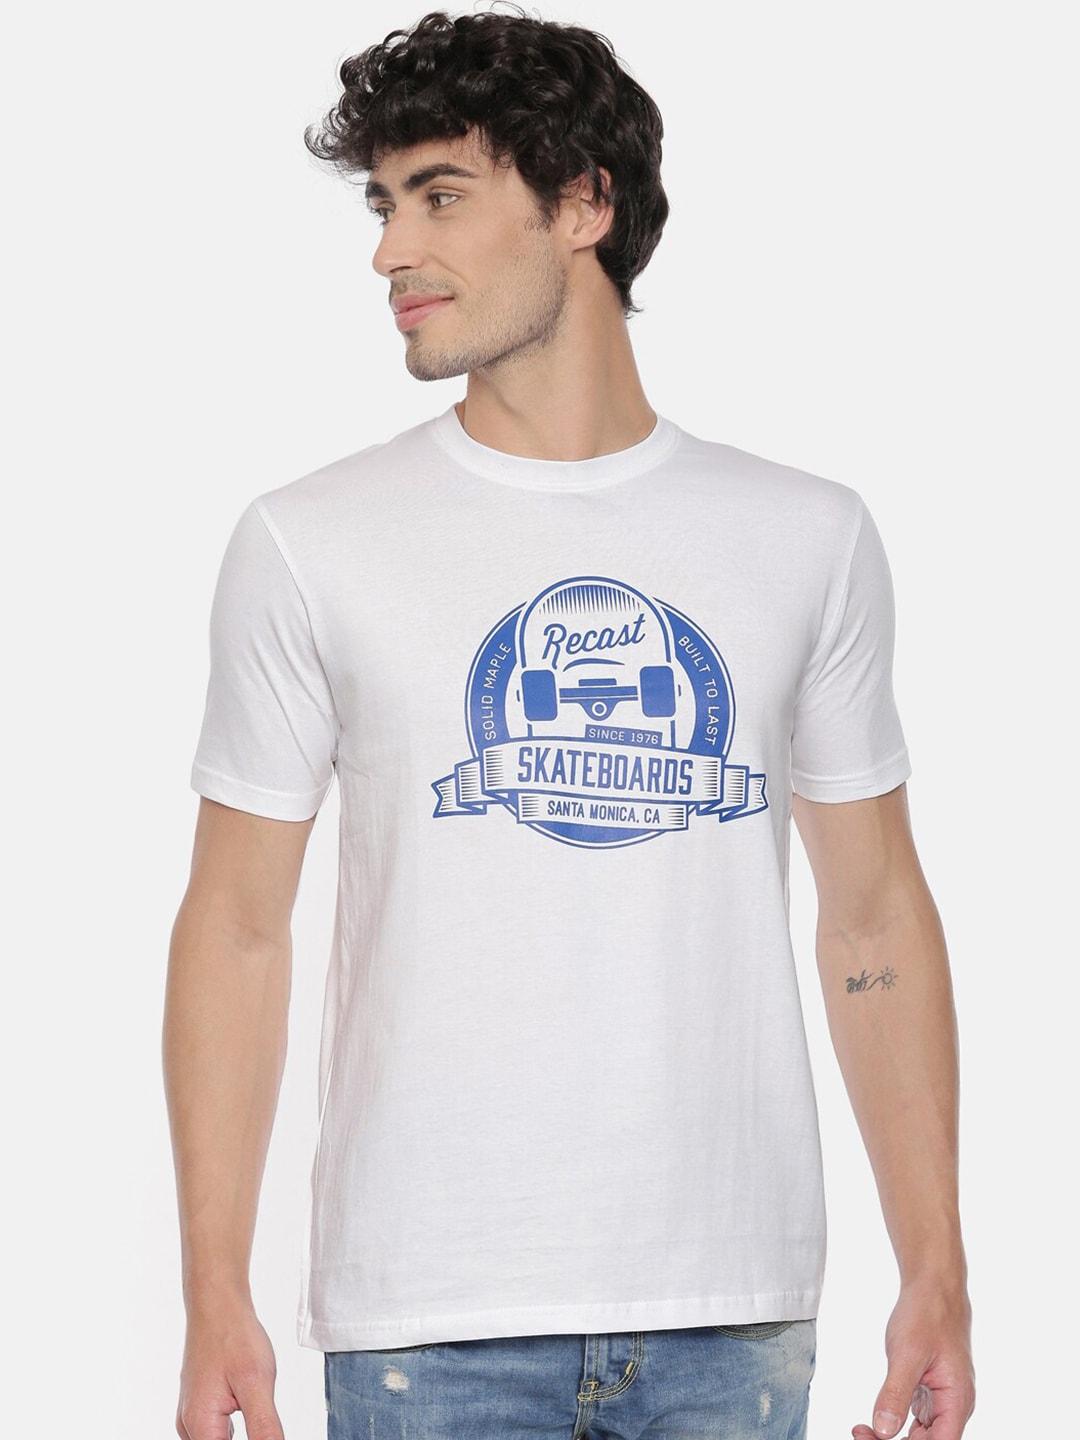 recast-men-white-typography-printed-pure-cotton-bio-finish-t-shirt